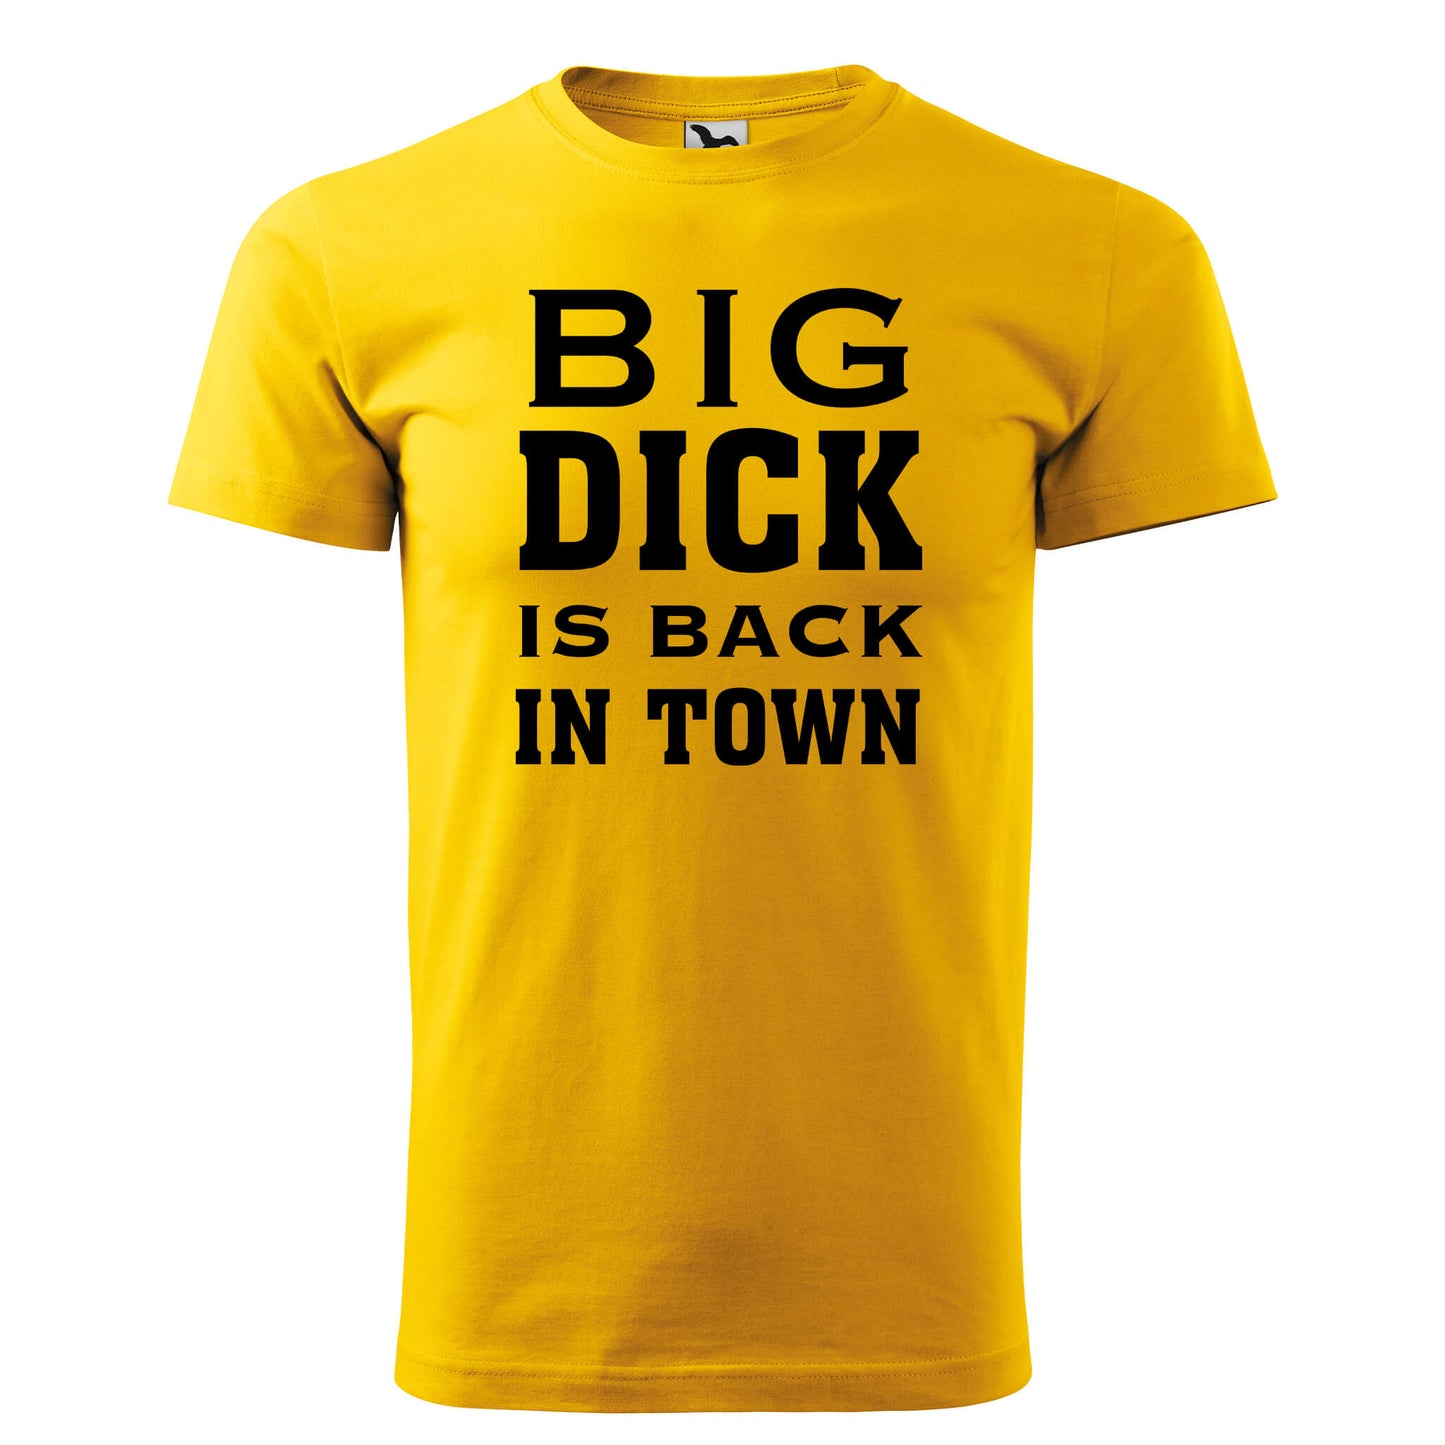 Póló - Big dick is back in town